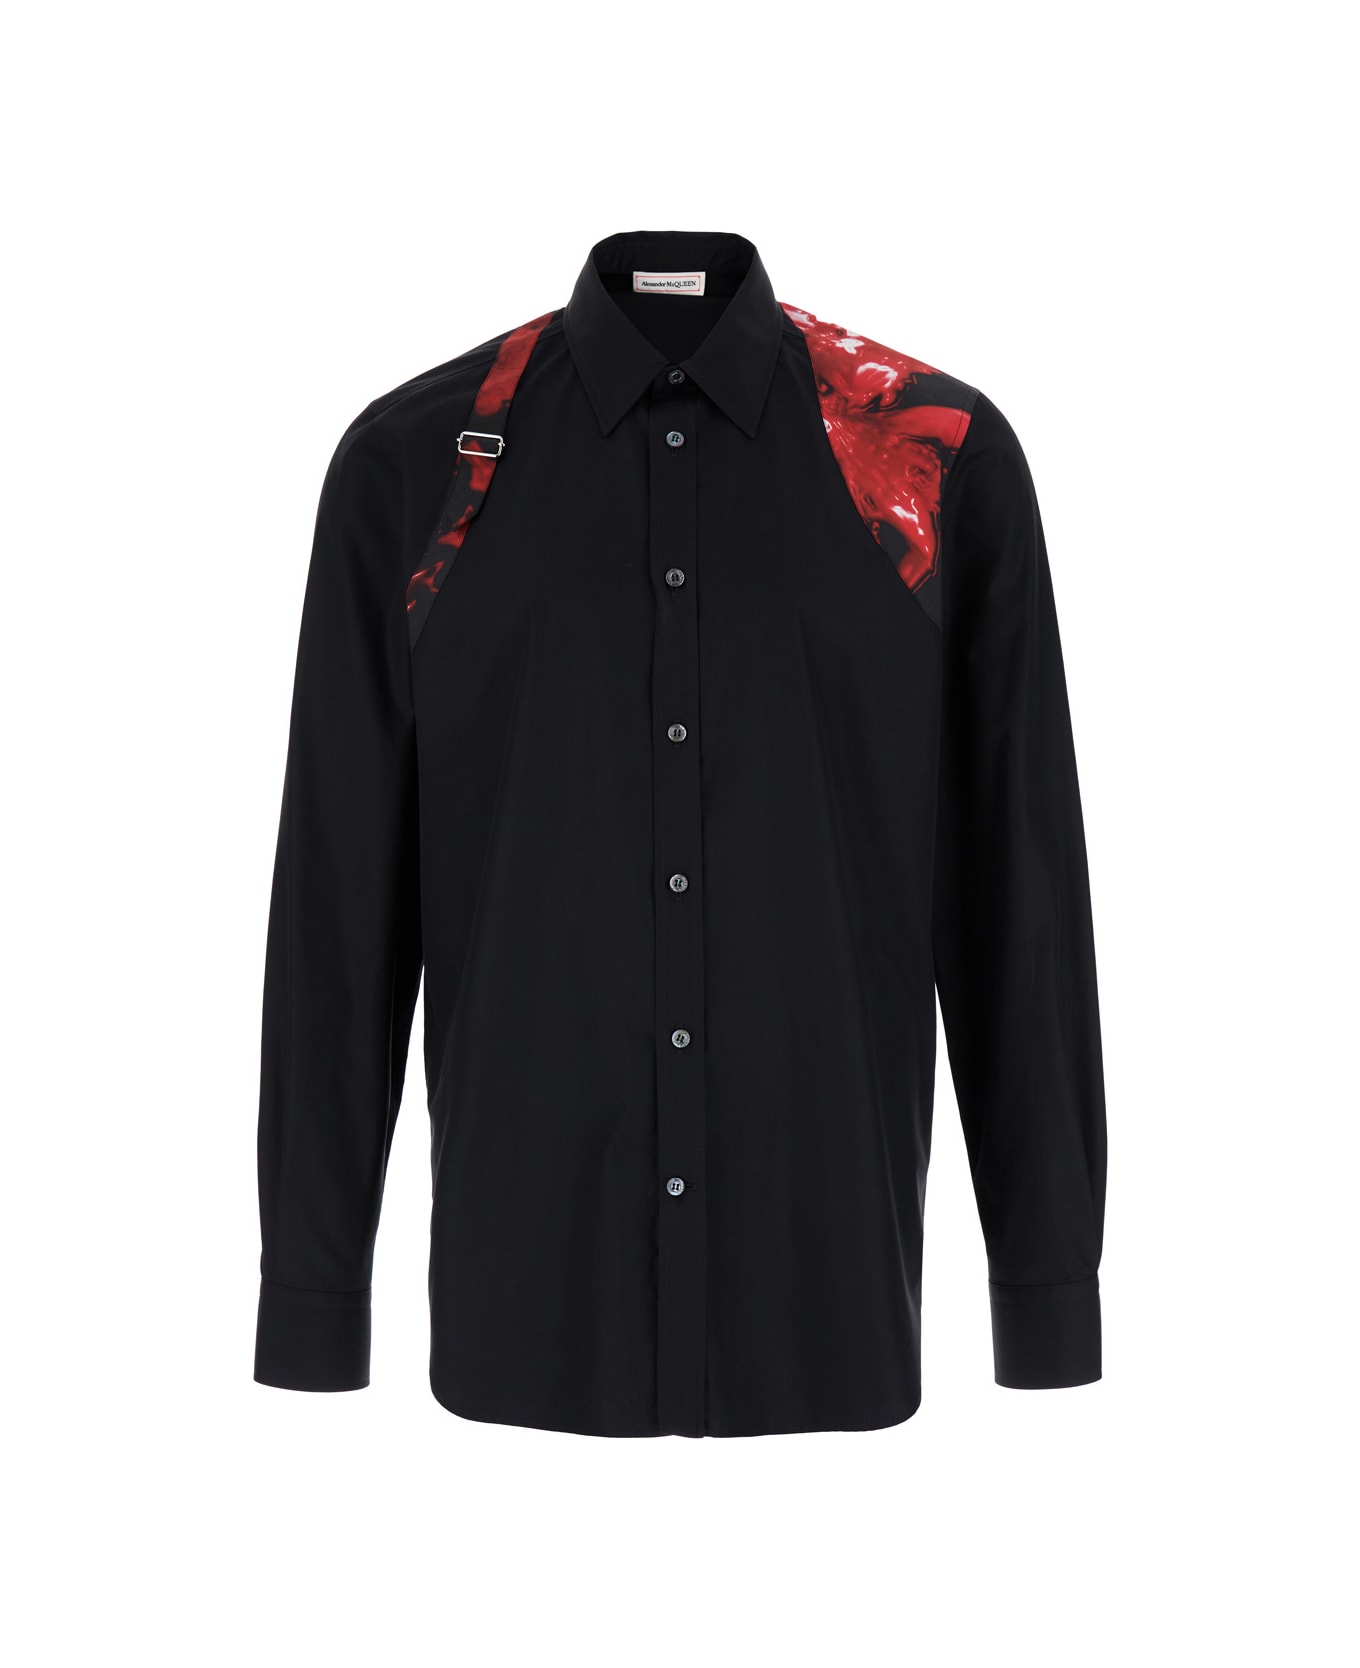 Alexander McQueen Black Shirt With Floral Print In Cotton Man - Black